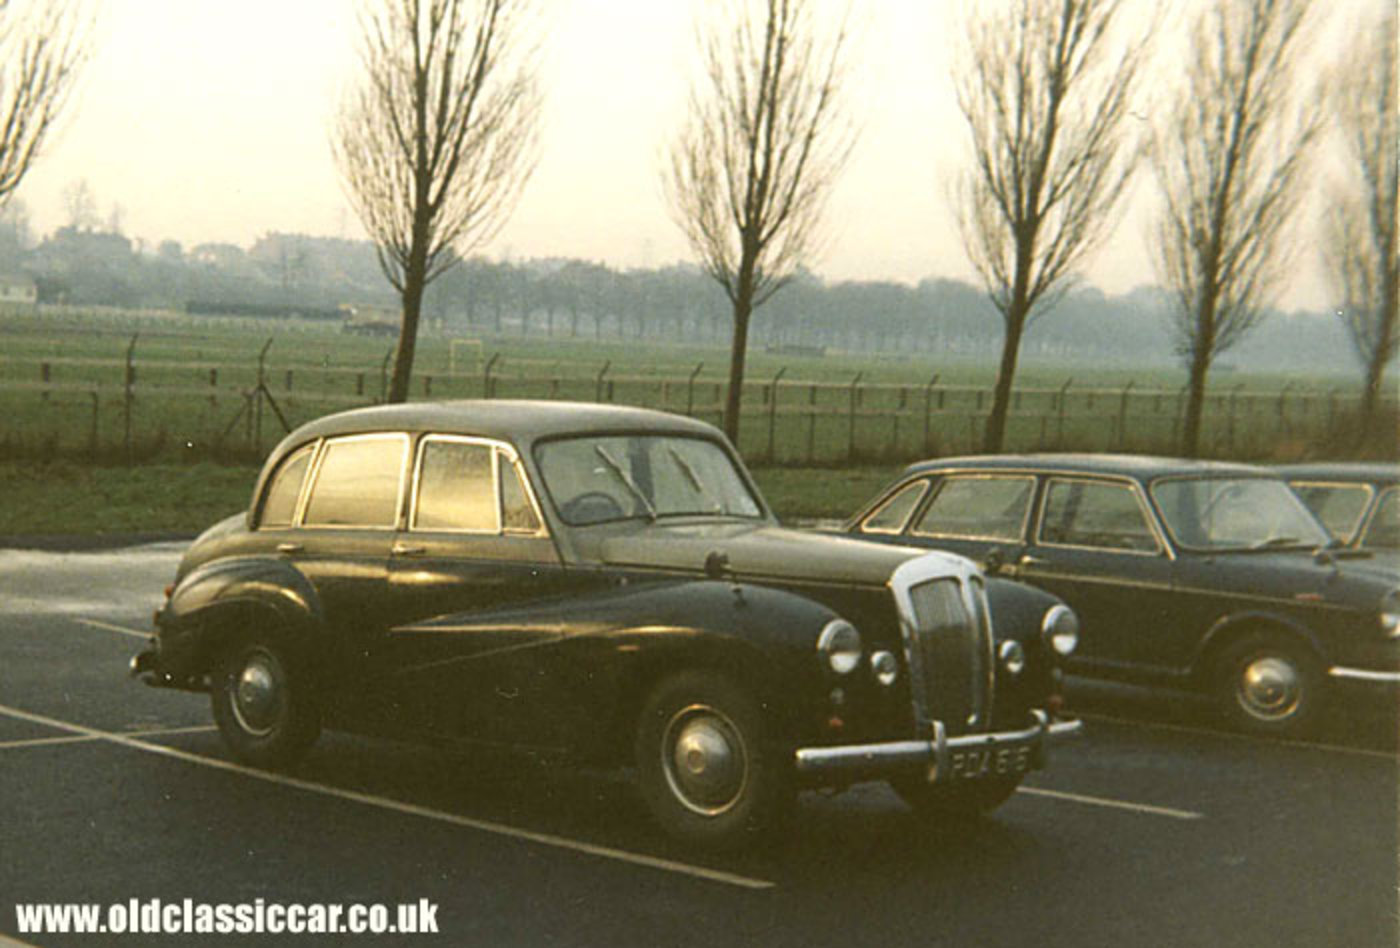 A Daimler Conquest car seen in 1969.